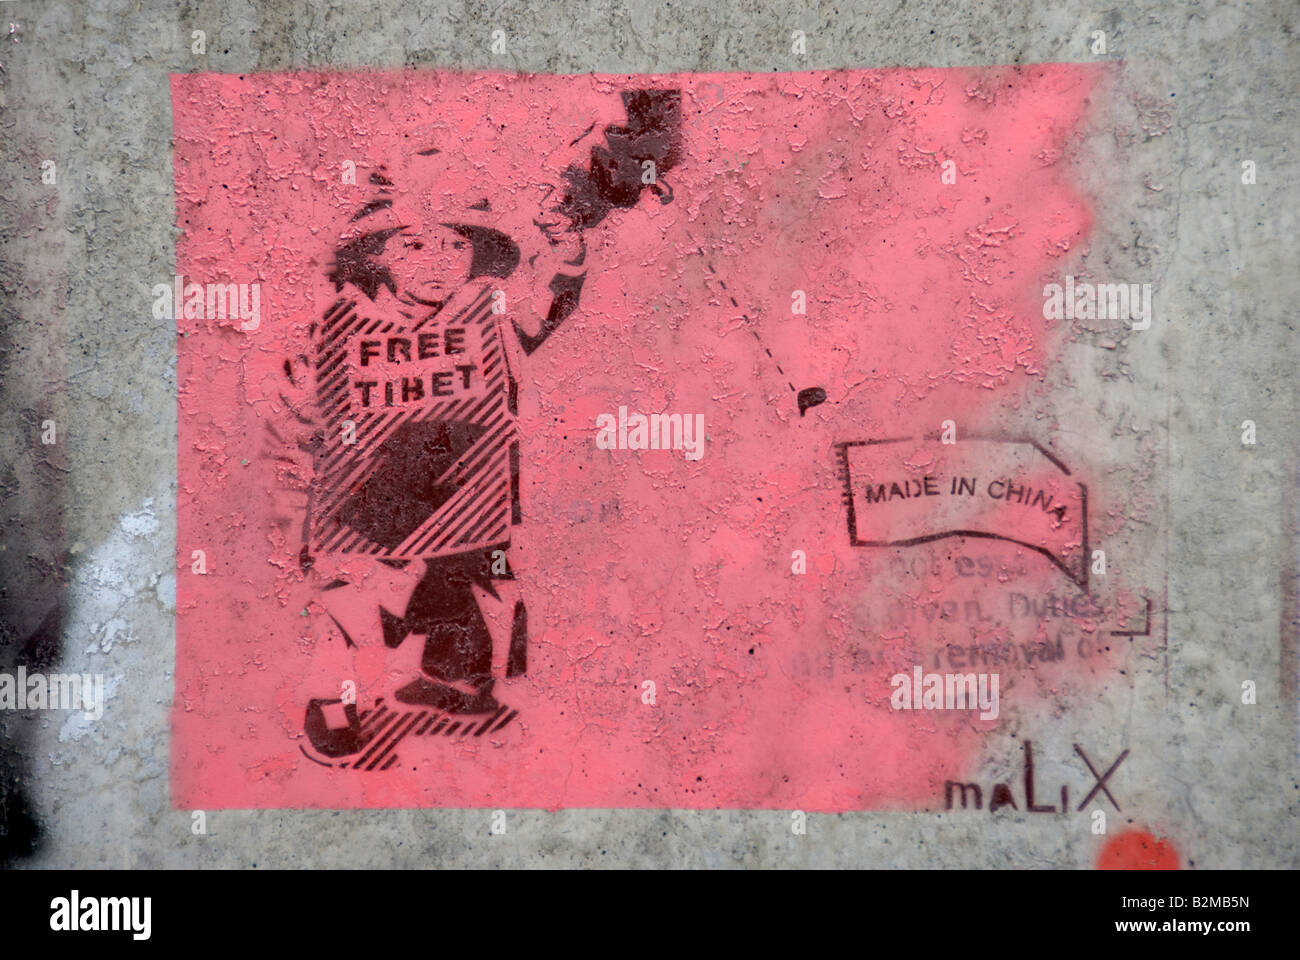 Banksy, les boîtes collectives Festival, 'Leake Street' Tunnel, la gare de Waterloo, Londres Banque D'Images